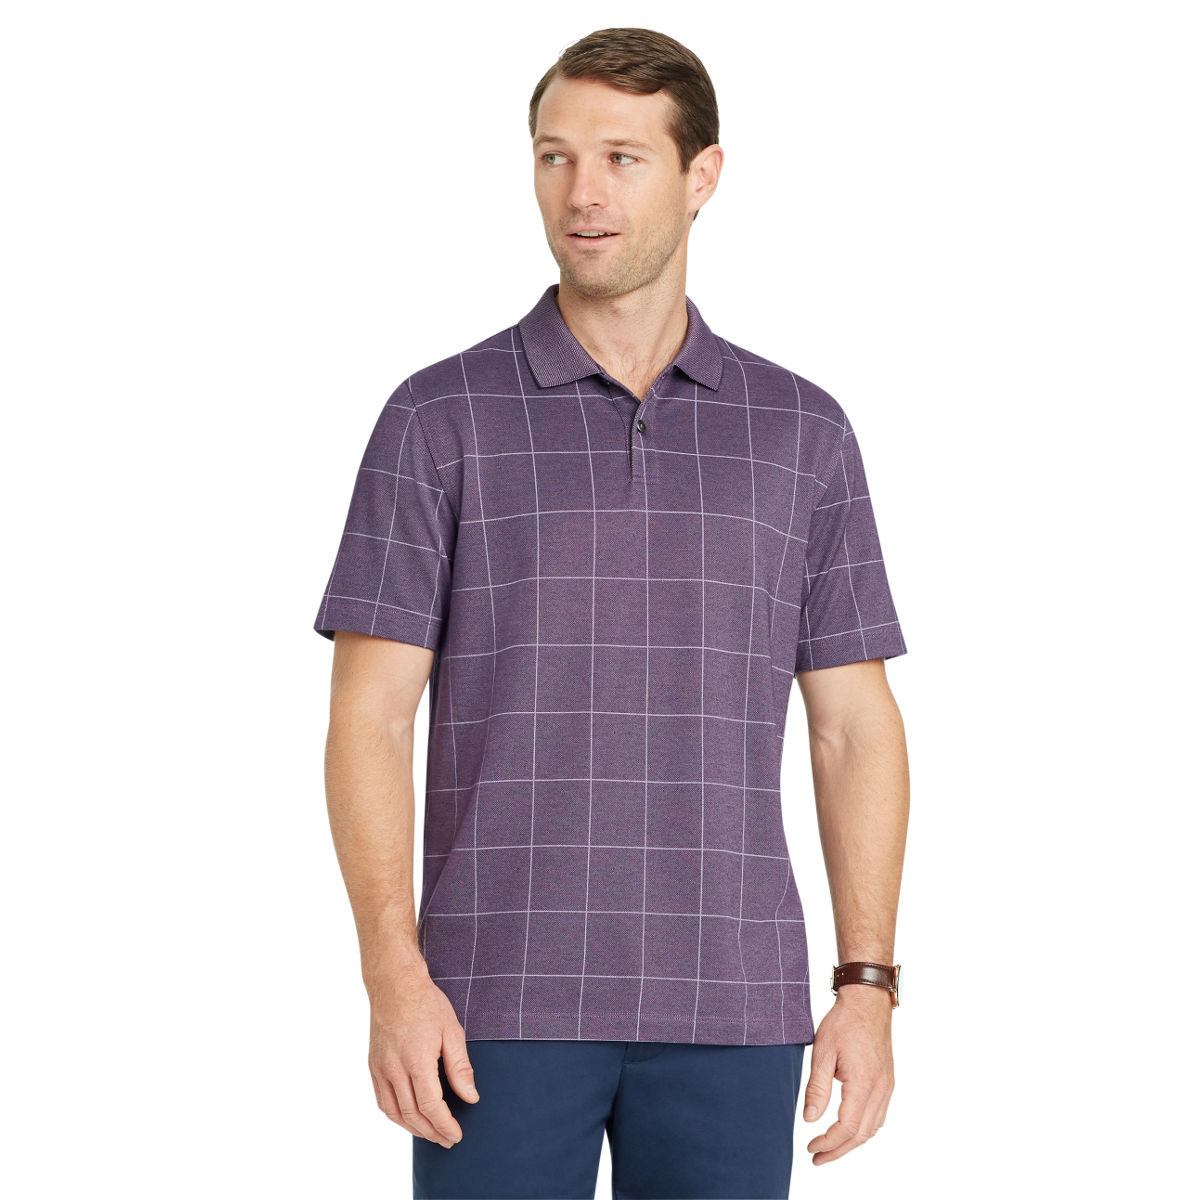 Van Heusen Men's Flex Print Windowpane Short-Sleeve Polo Shirt - Purple, L